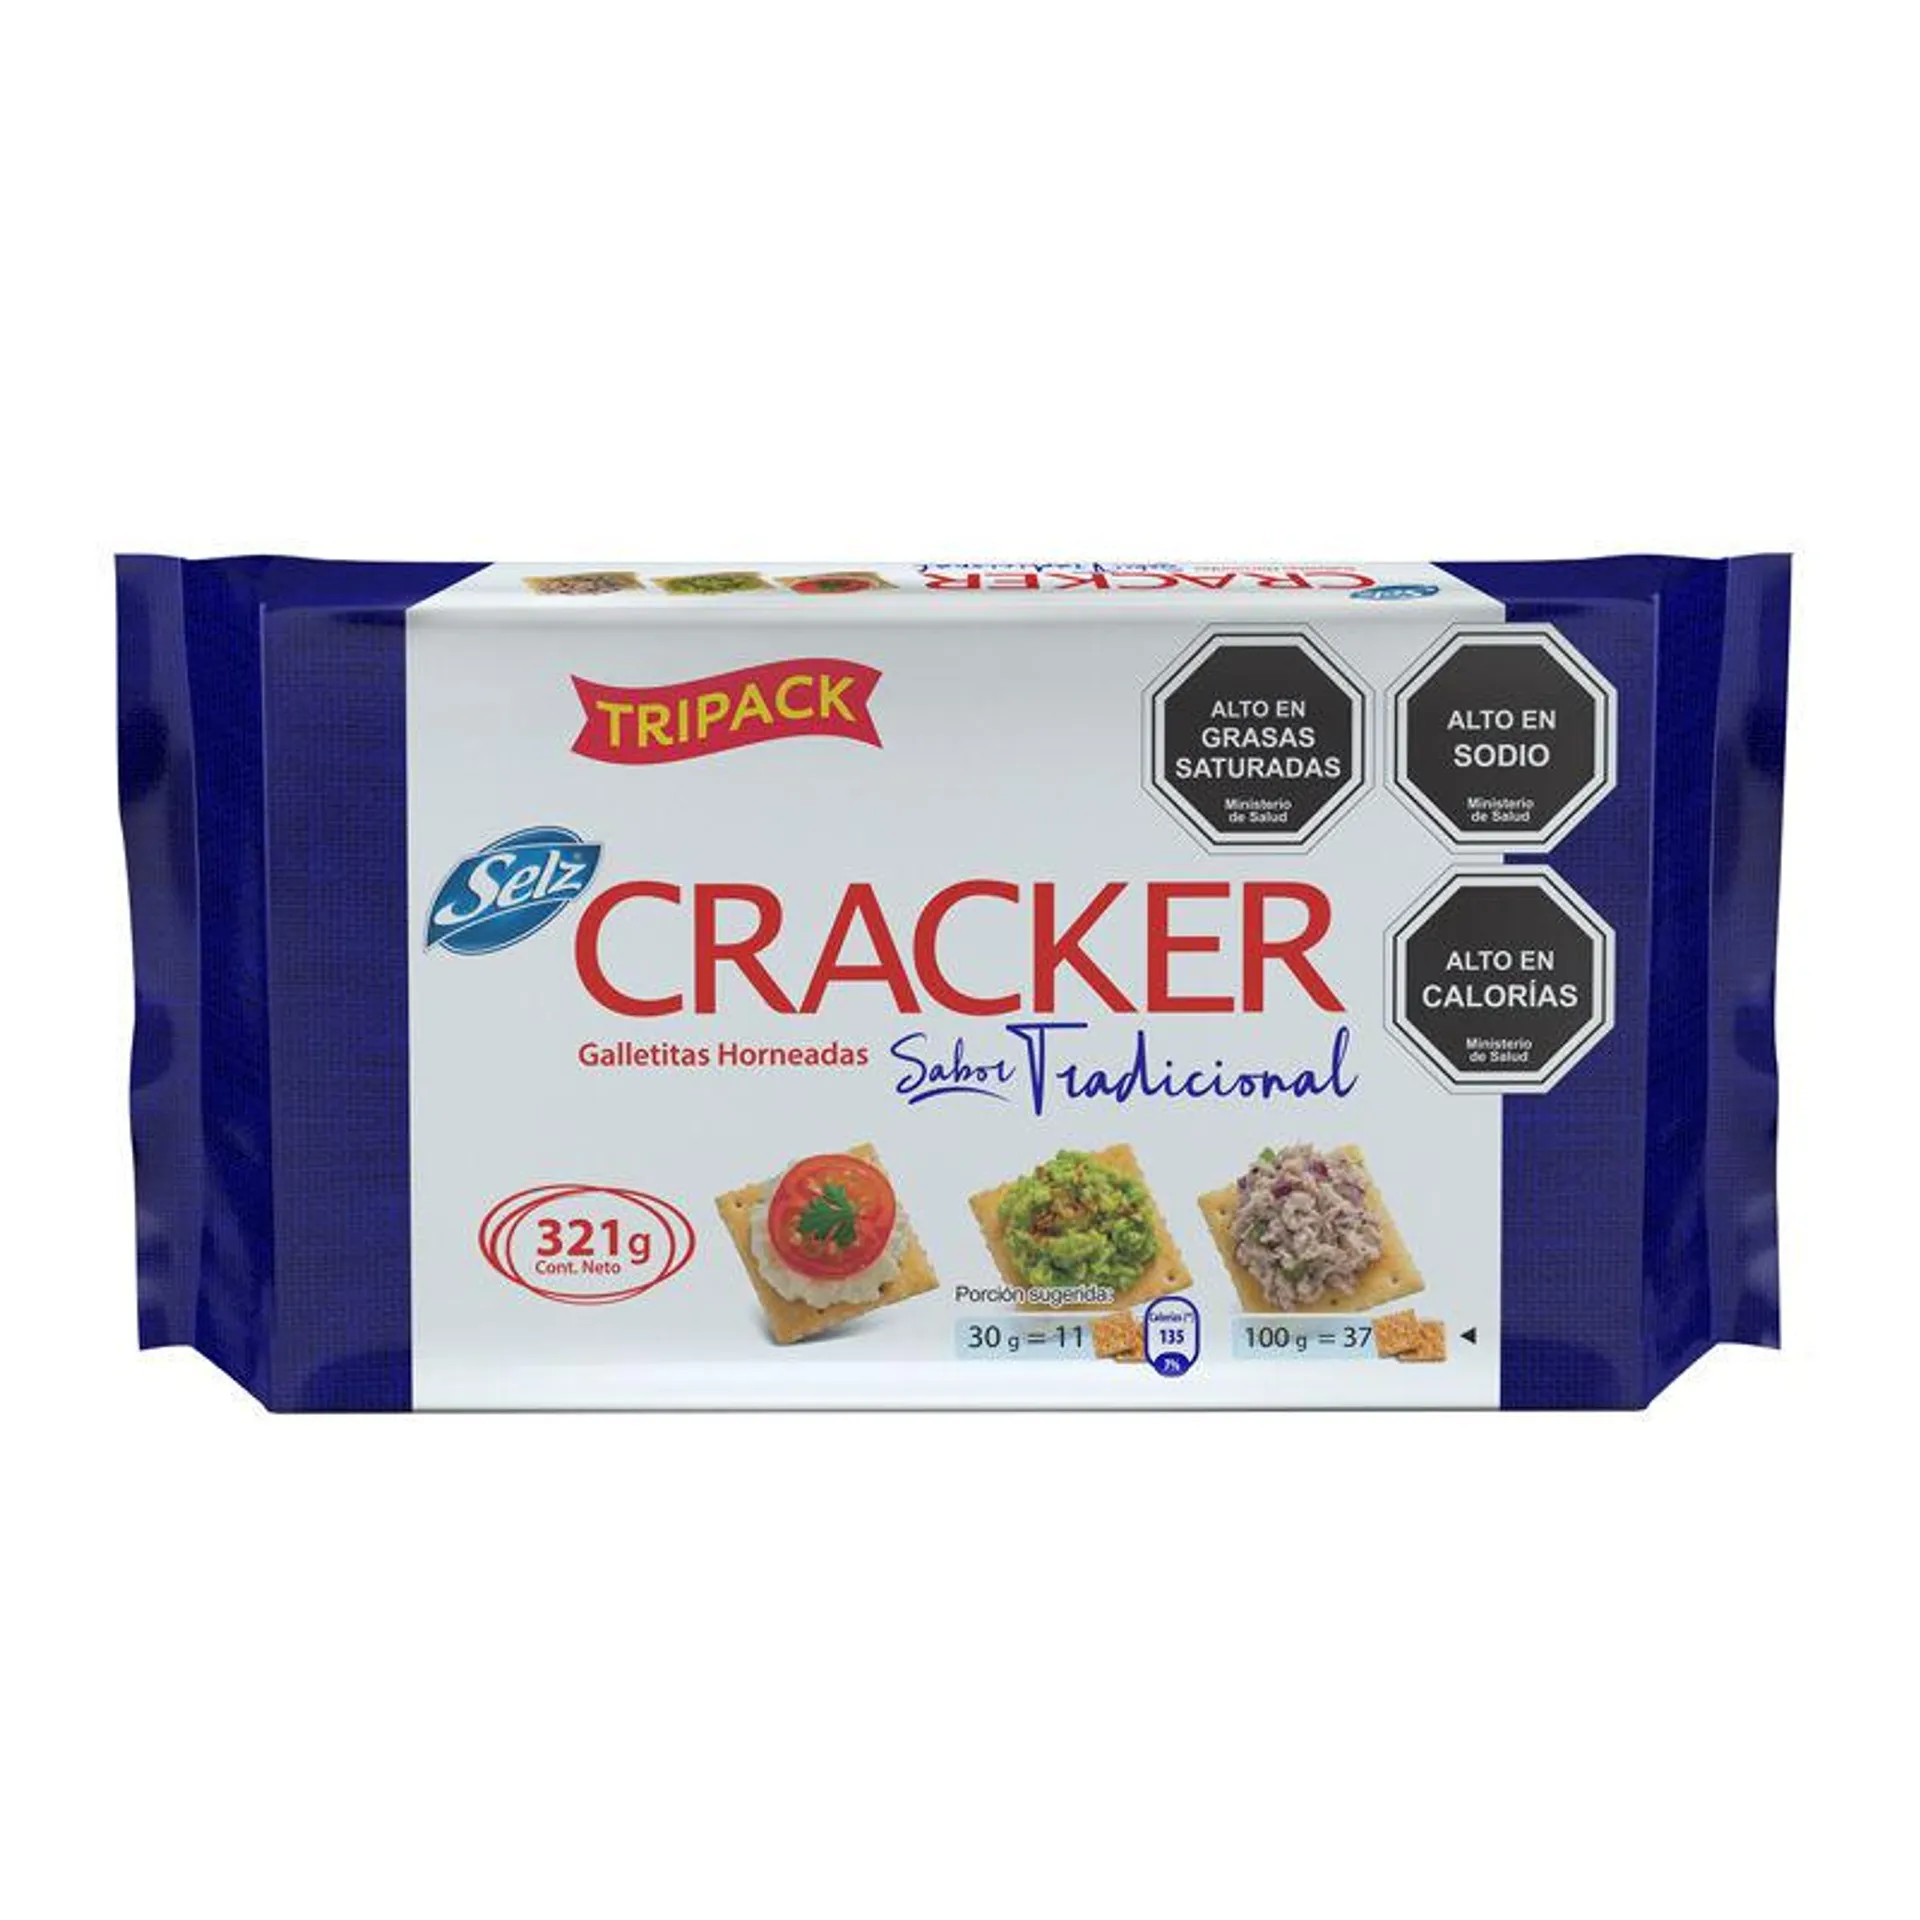 Galleta Cracker Tripack, 107 g